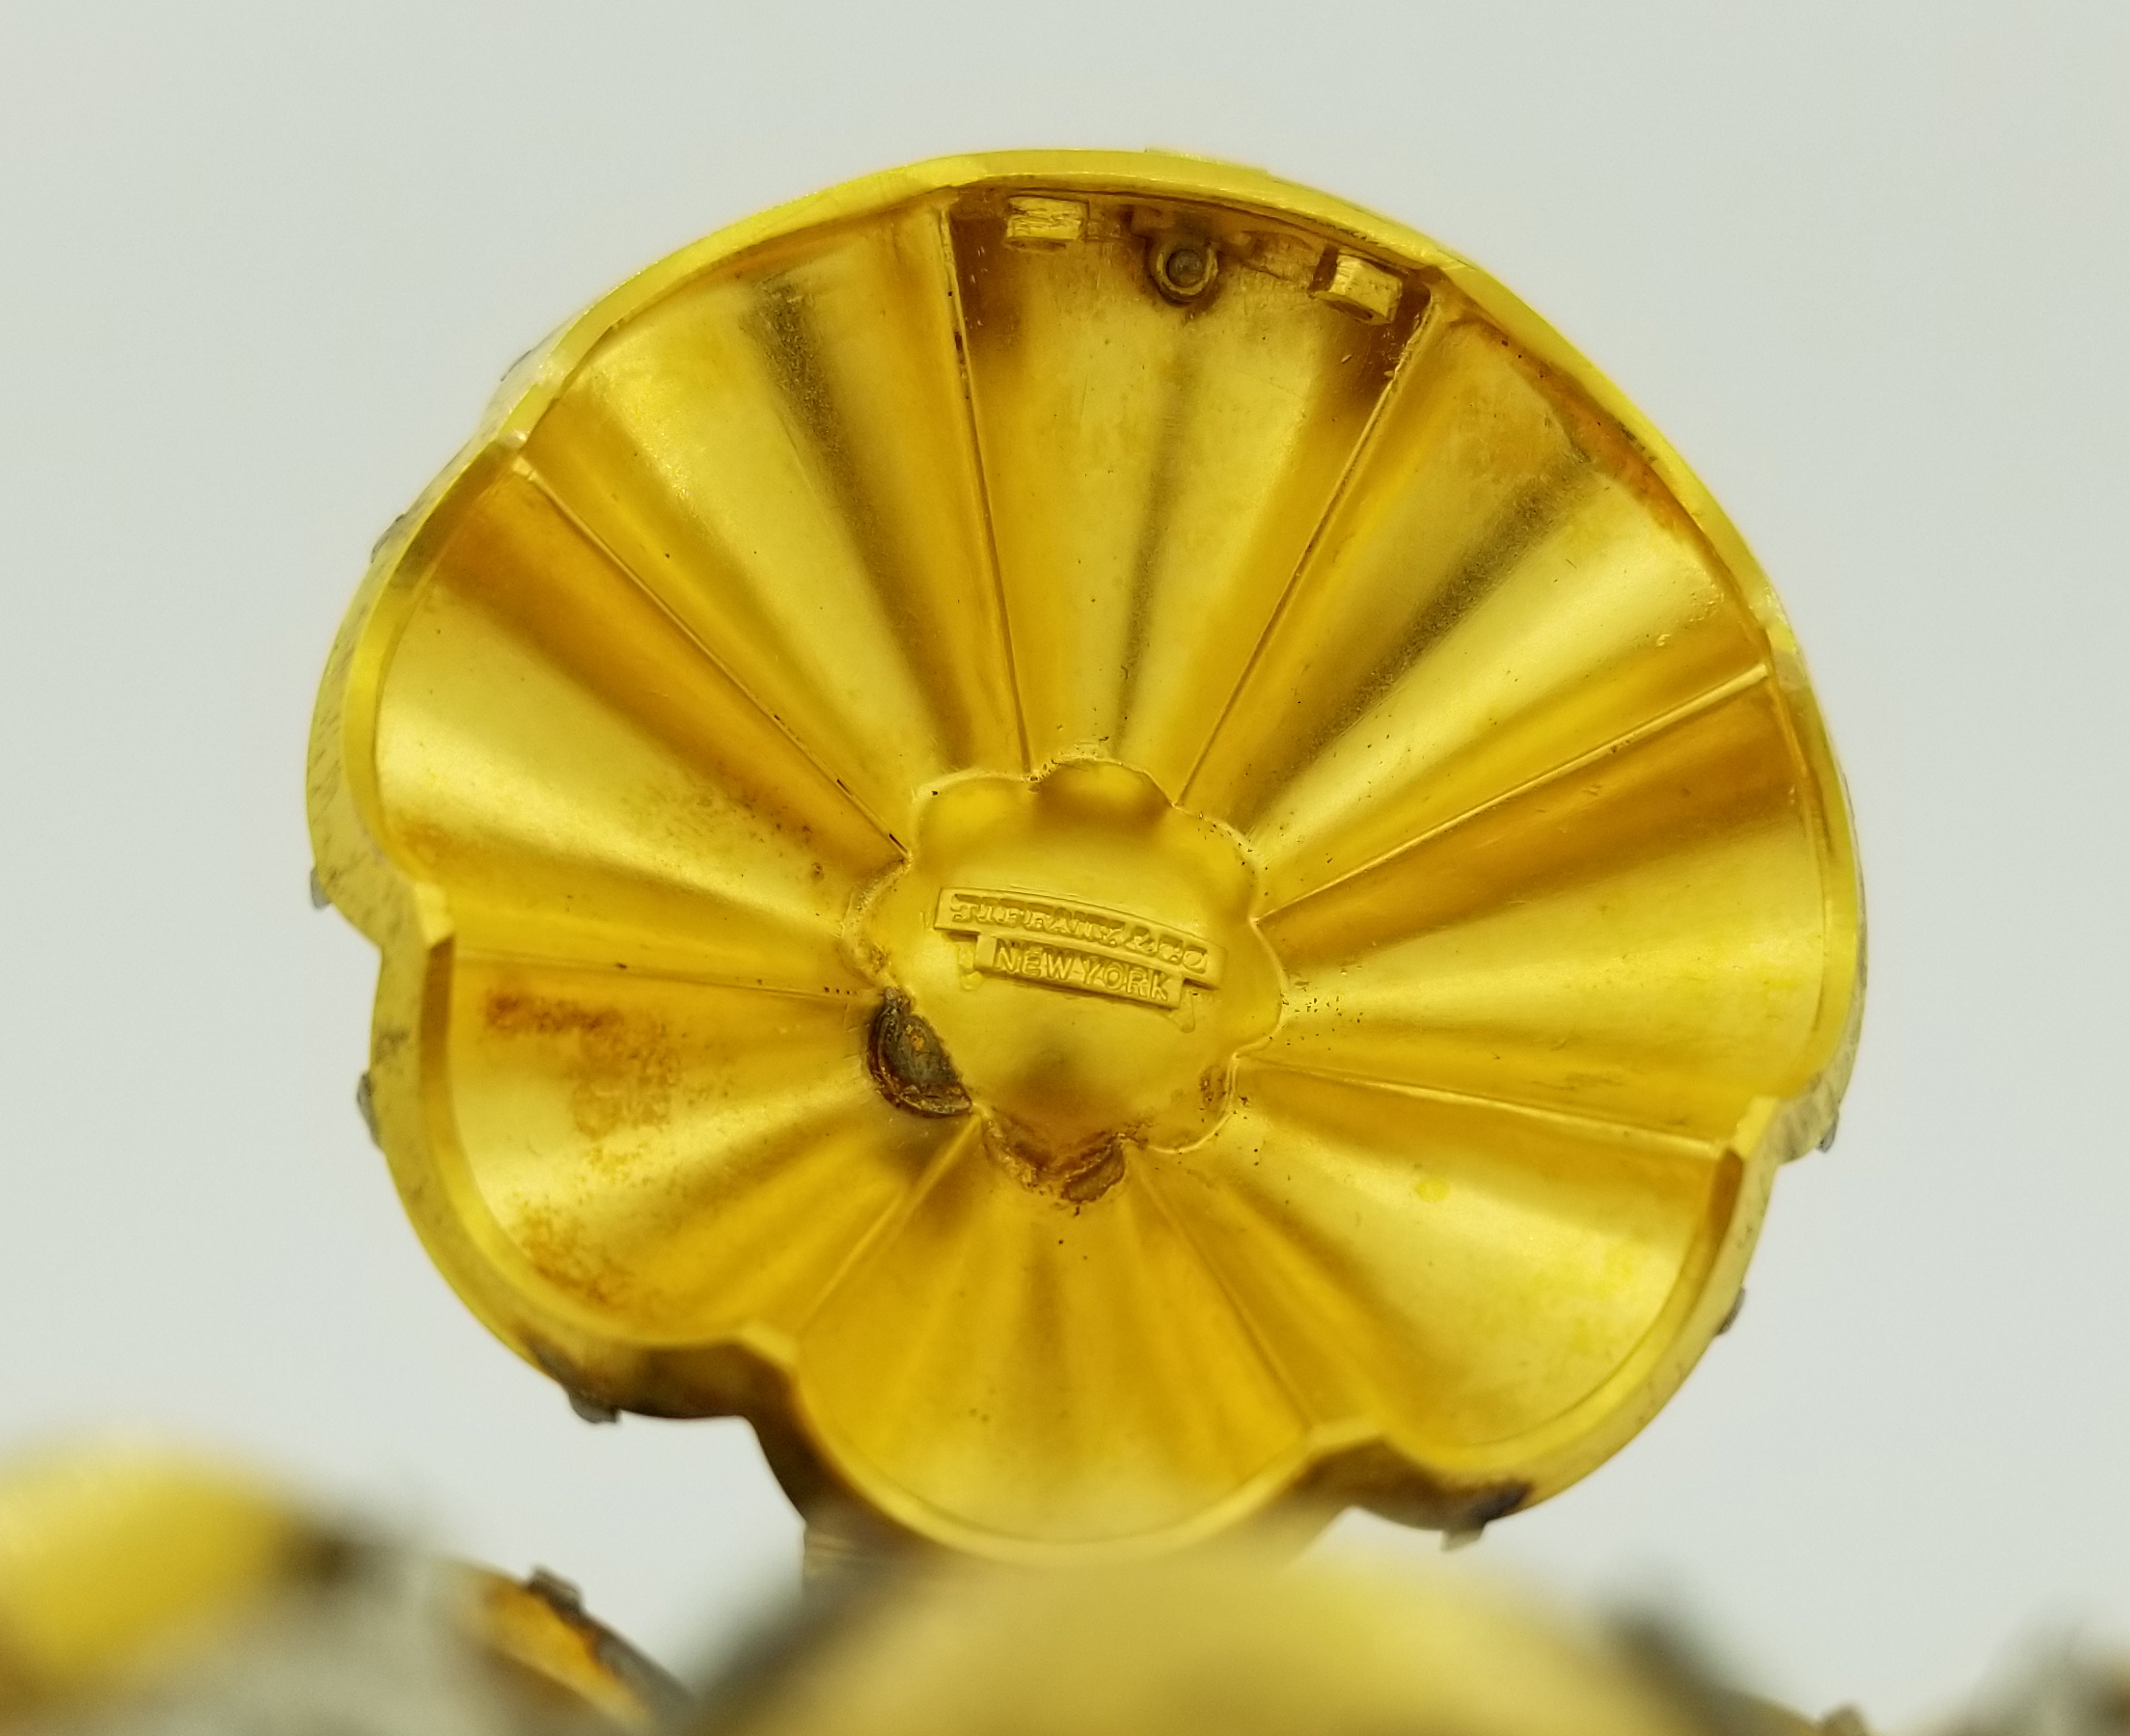 Unusual Tiffany & Co. 18K Gold Pill Box - Image 7 of 8